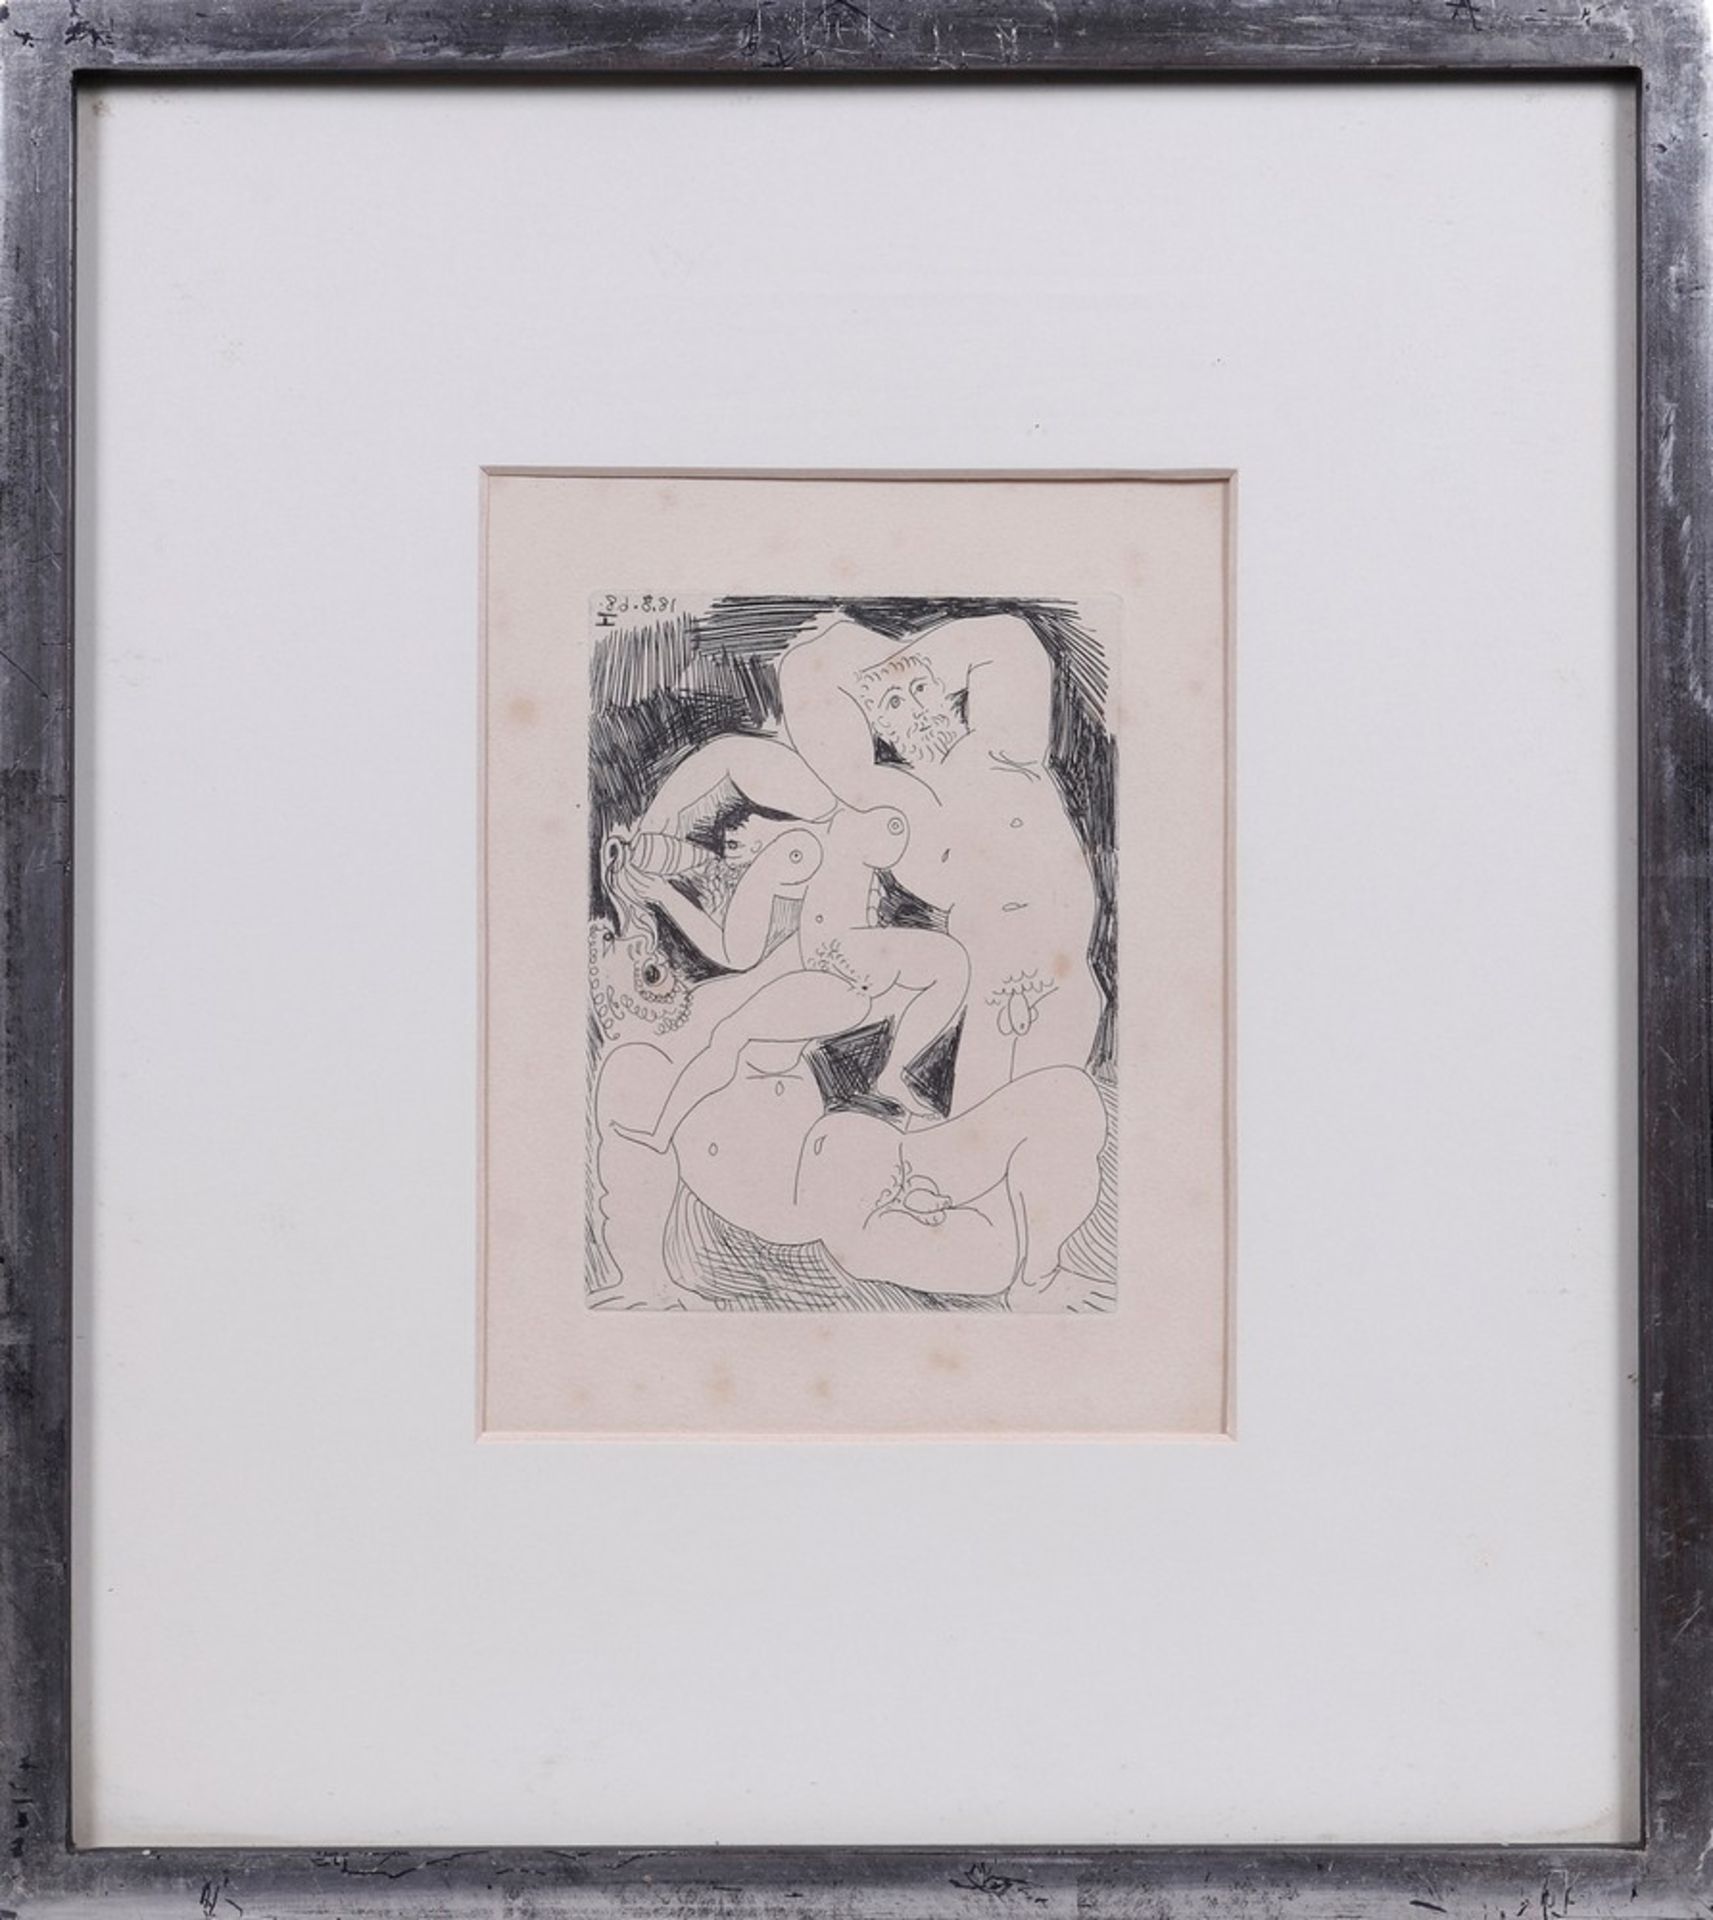 Pablo Ruiz Picasso (1881, Malaga, Spain - 1973, Mougins, France)